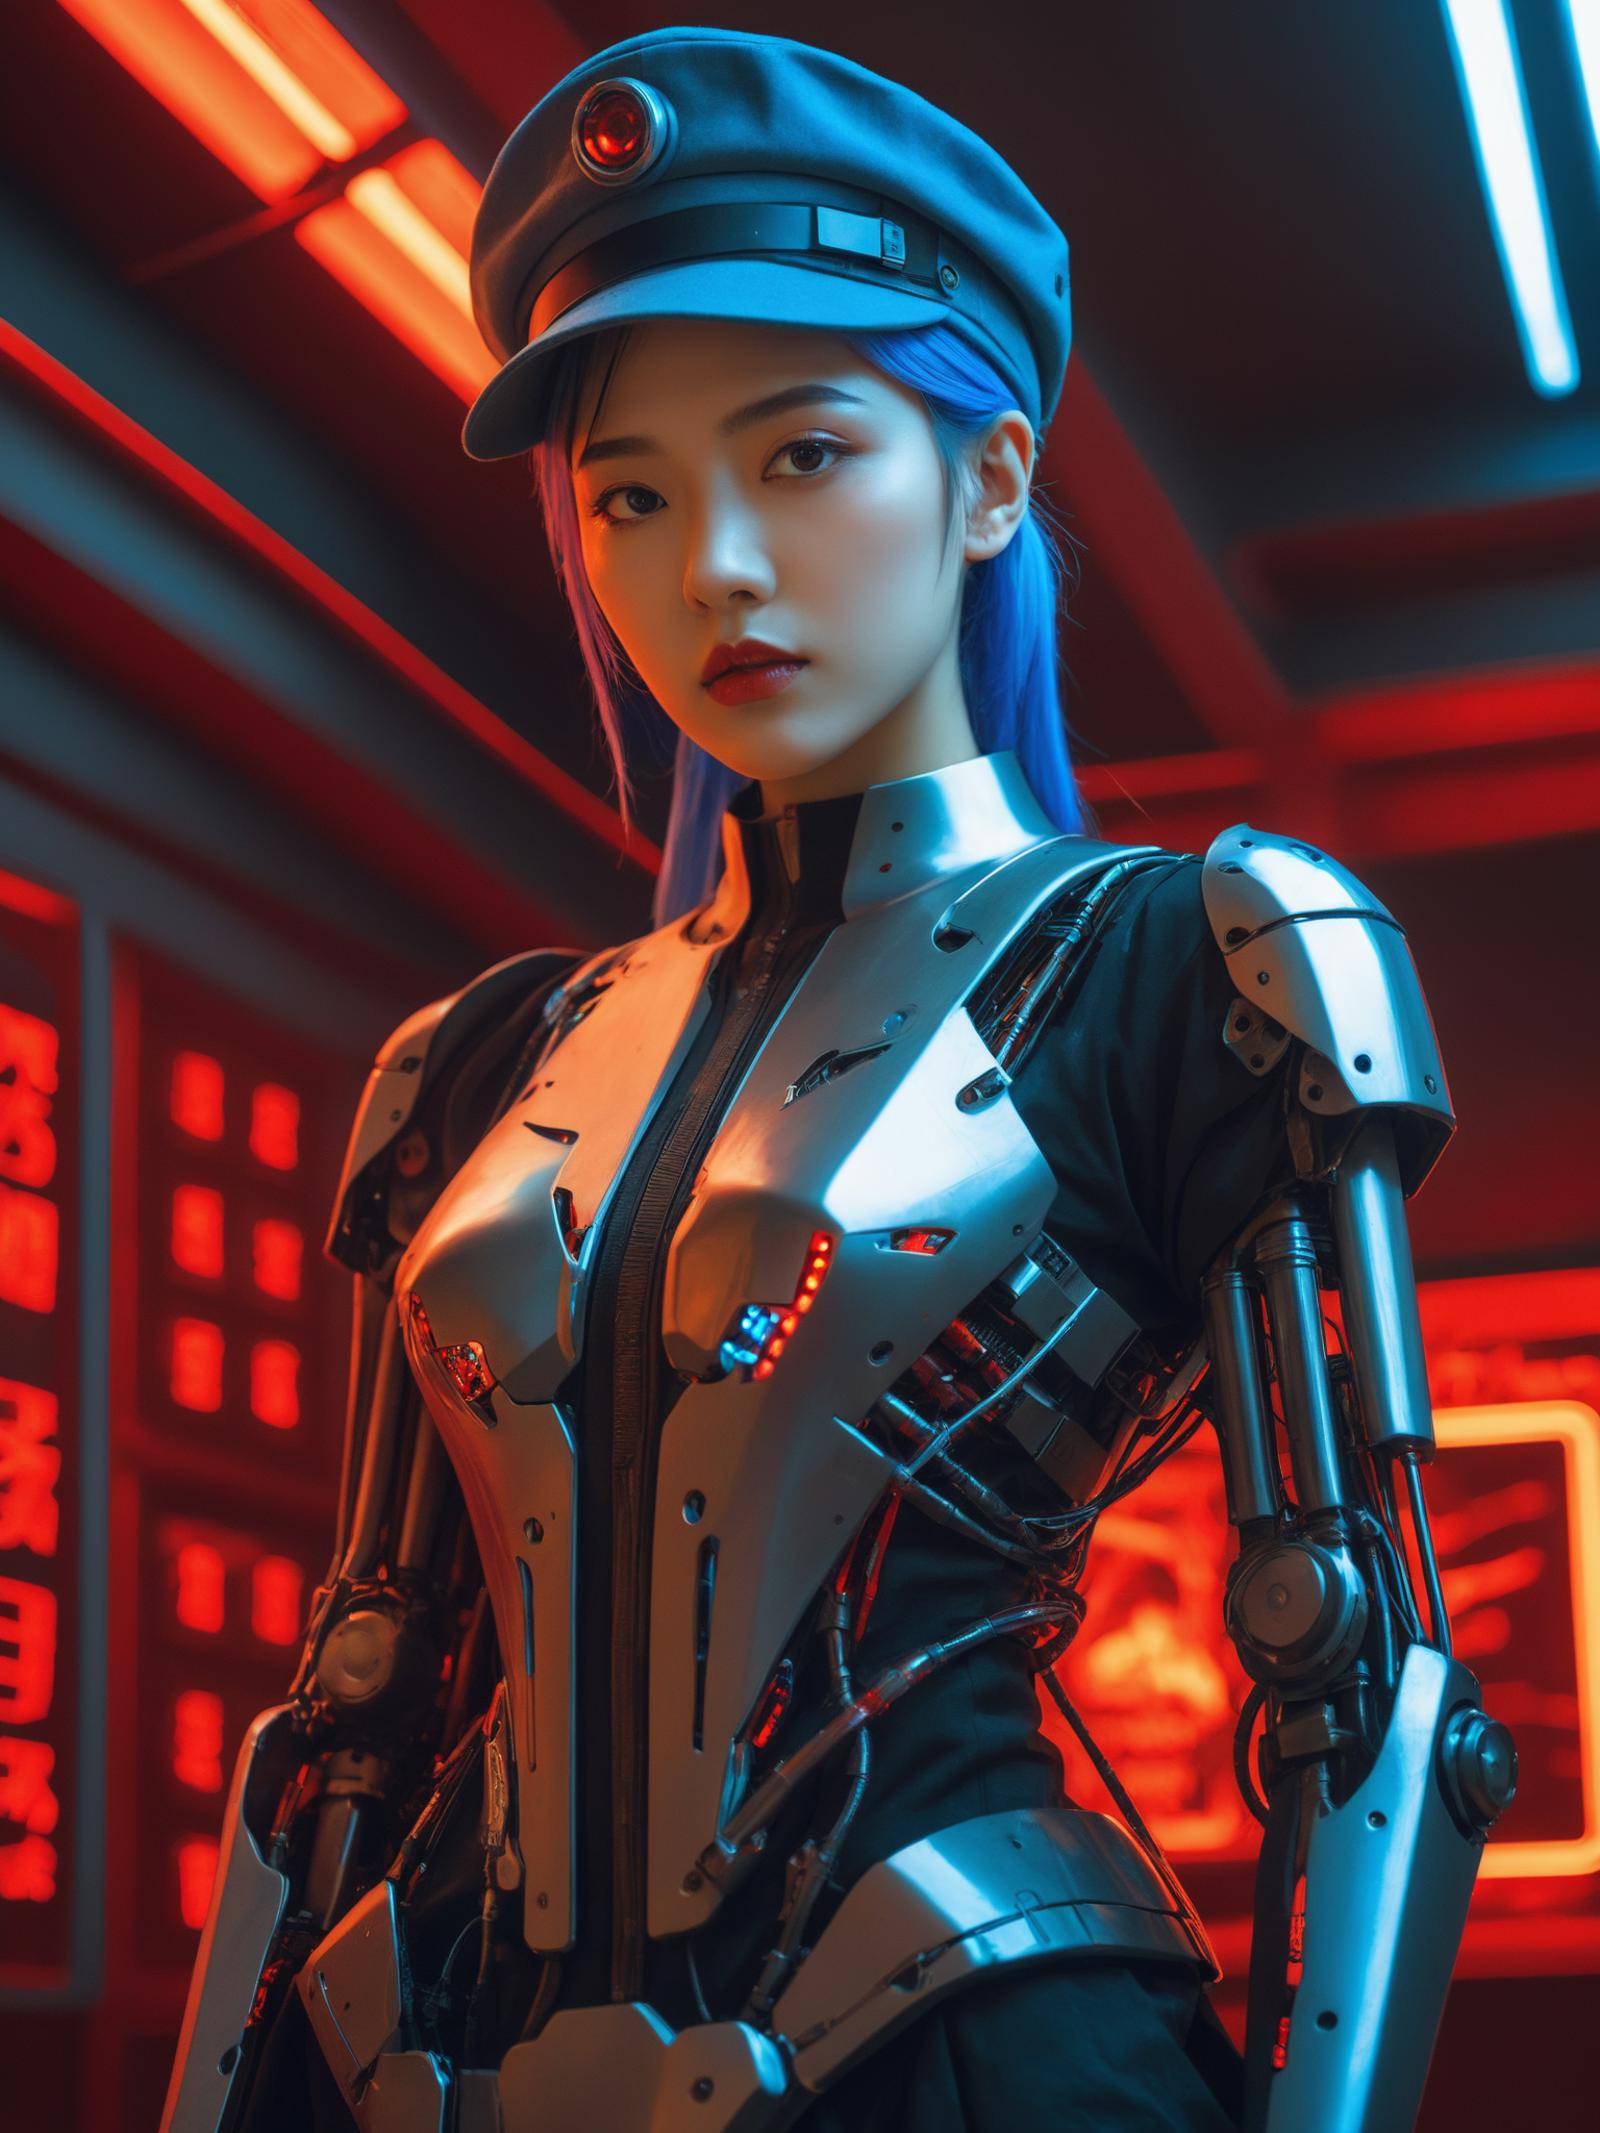 AI model image by MIAOKA